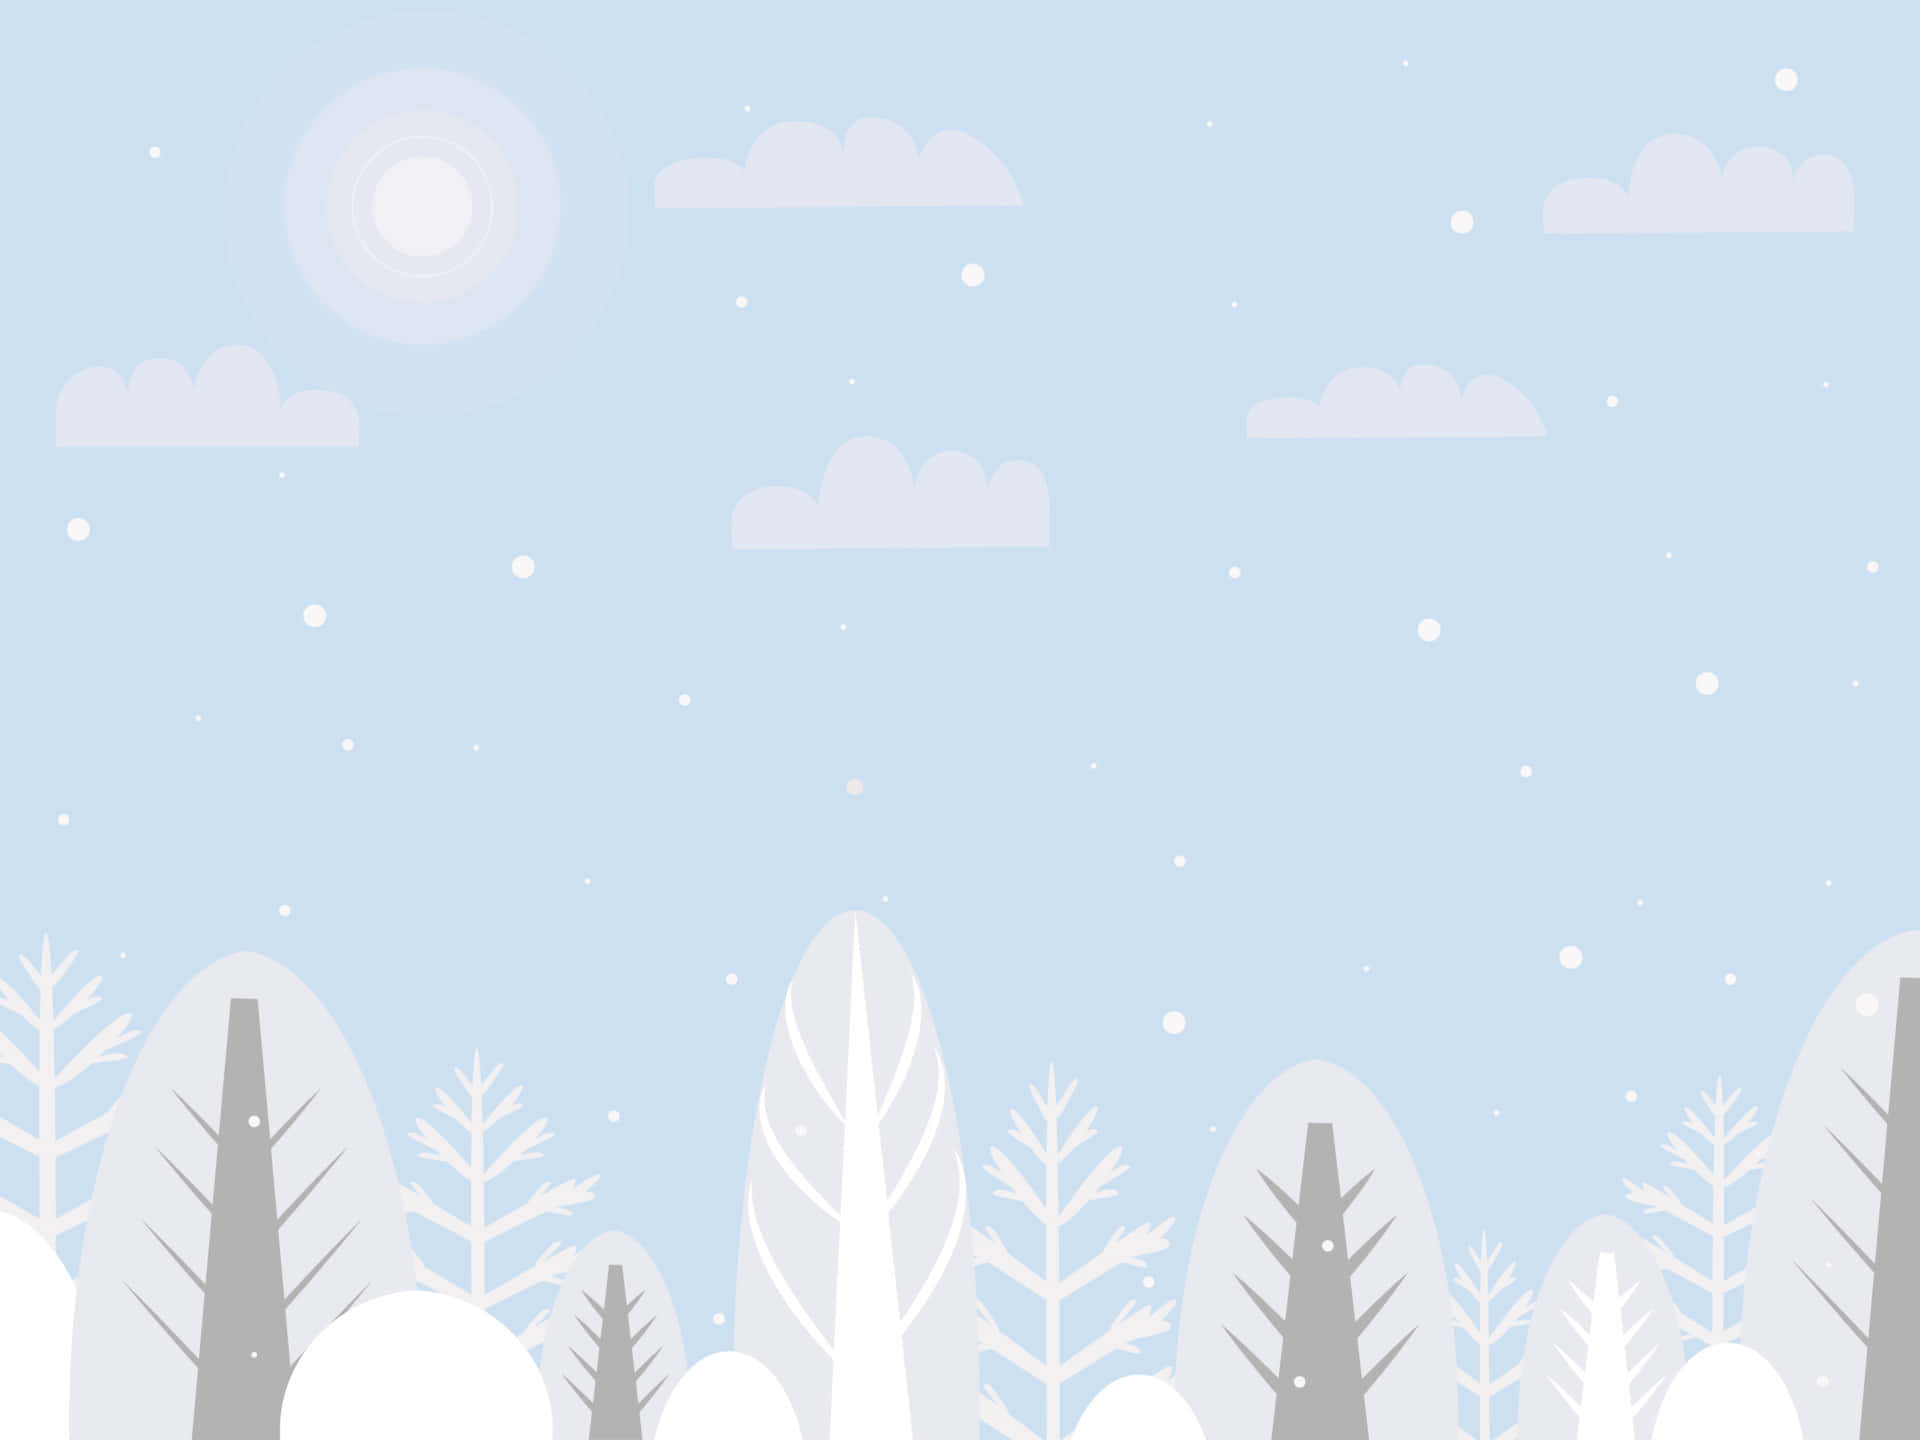 100+] Cute Winter Backgrounds